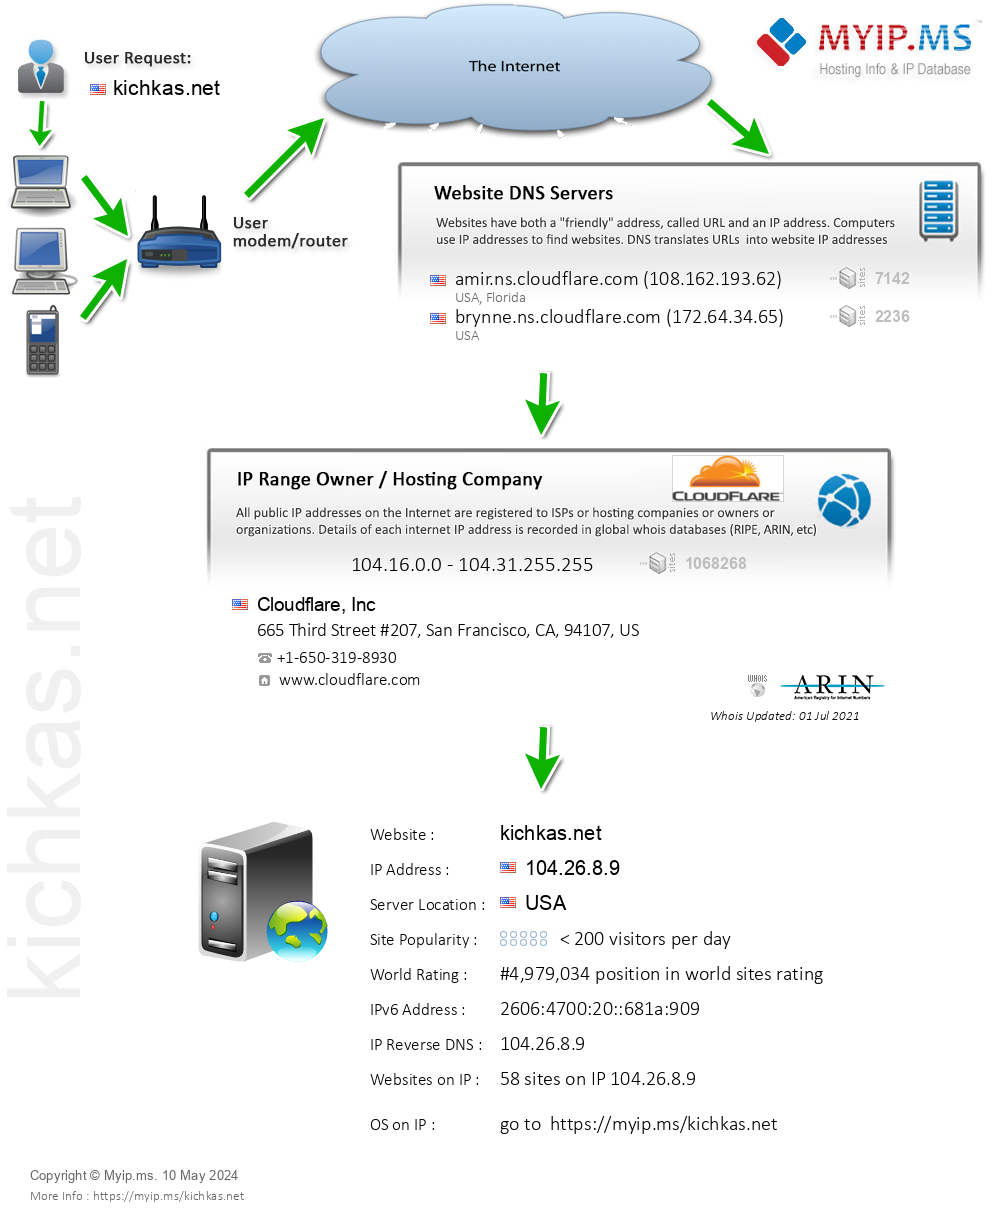 Kichkas.net - Website Hosting Visual IP Diagram